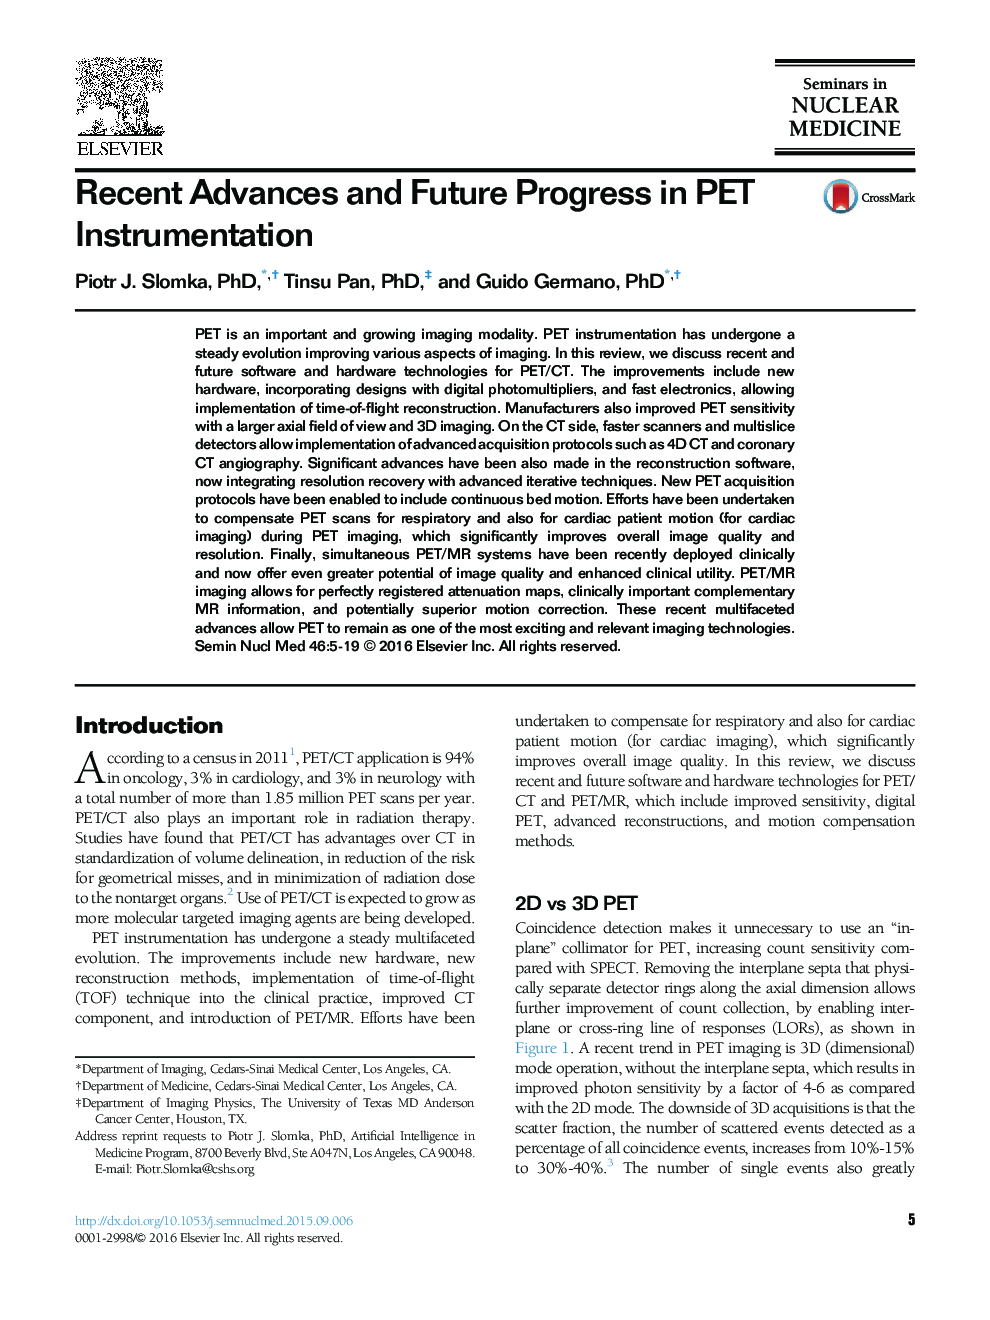 Recent Advances and Future Progress in PET Instrumentation